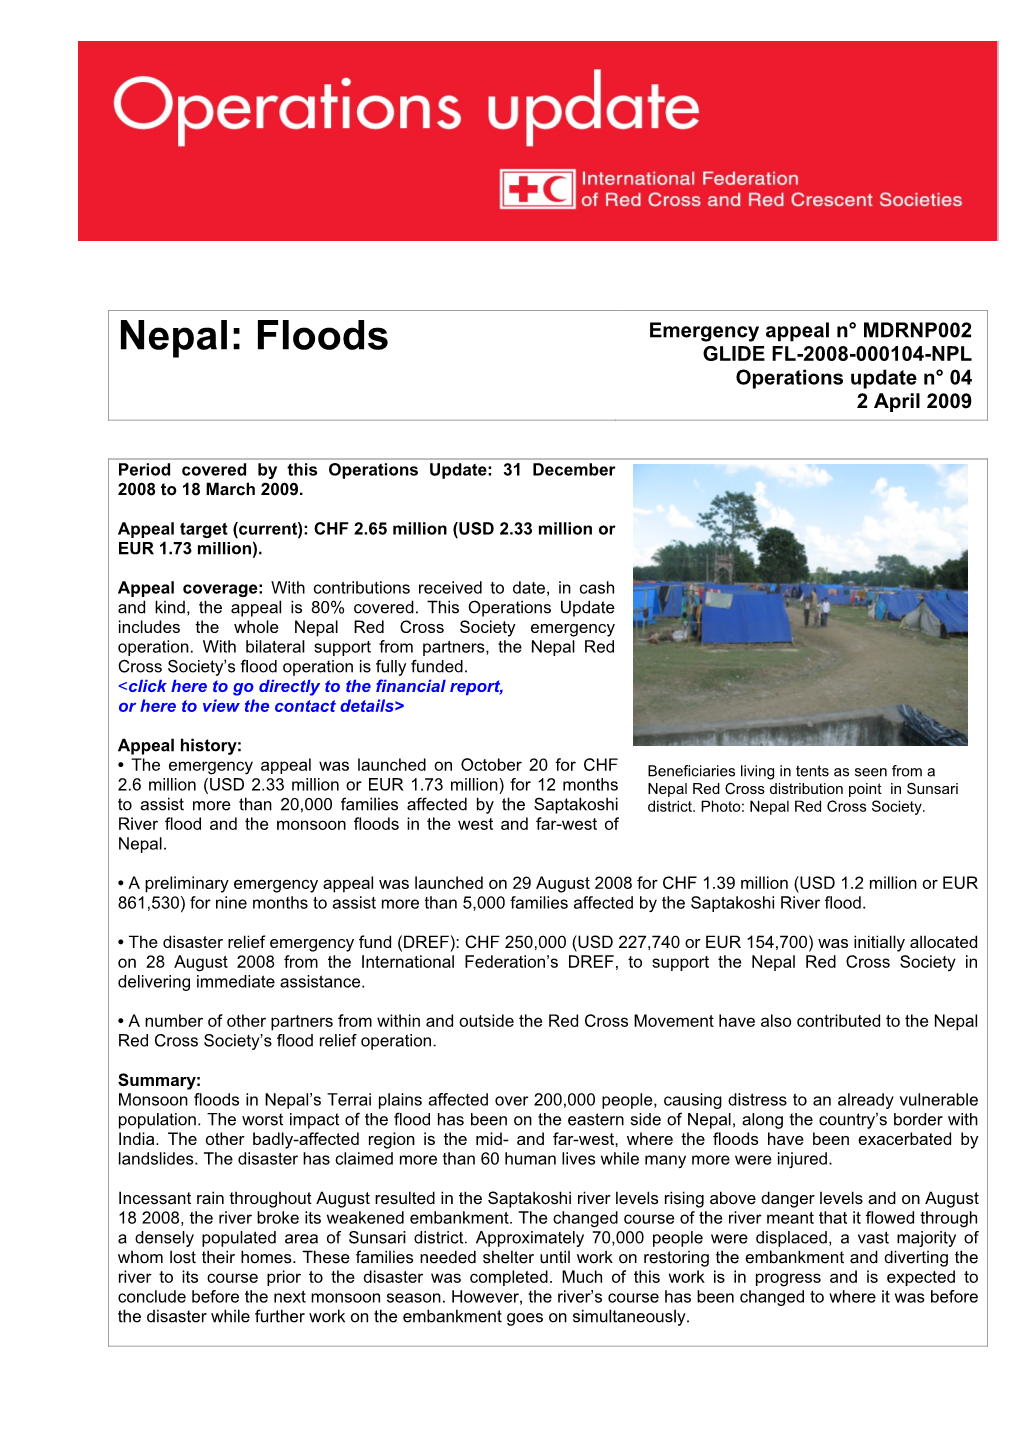 Nepal: Floods GLIDE FL-2008-000104-NPL Operations Update N° 04 2 April 2009